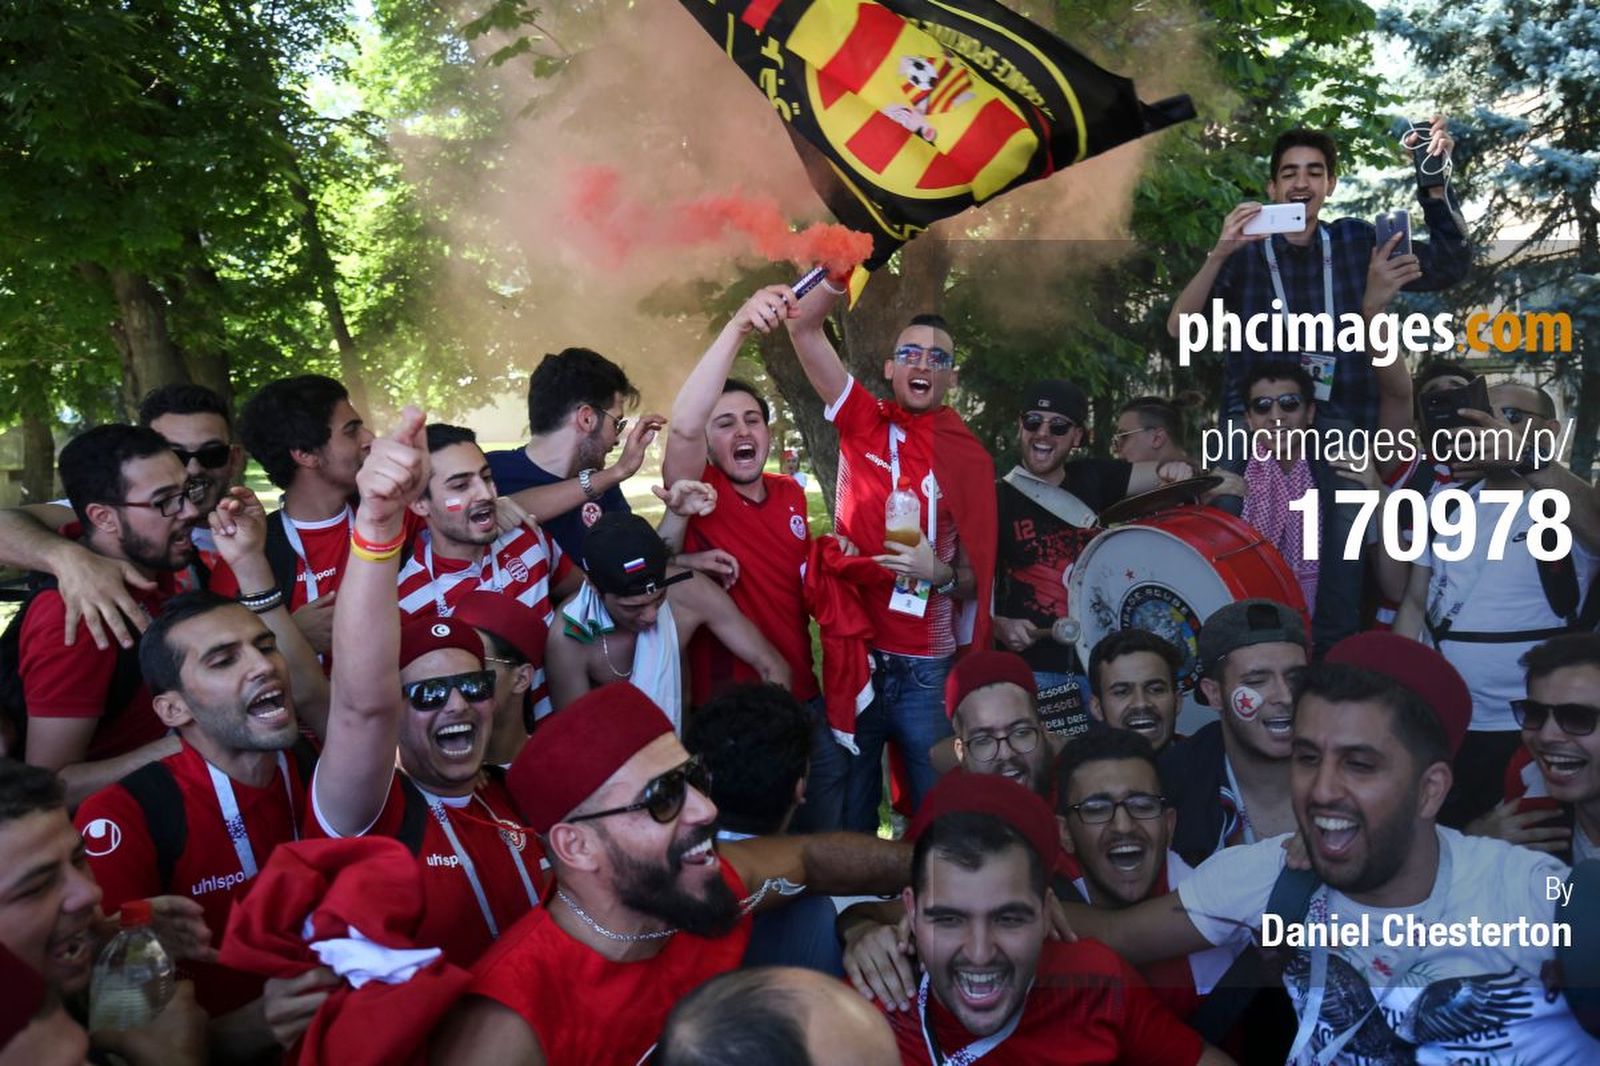 Tunisia fans outside the FIFA Fan Fest before the match